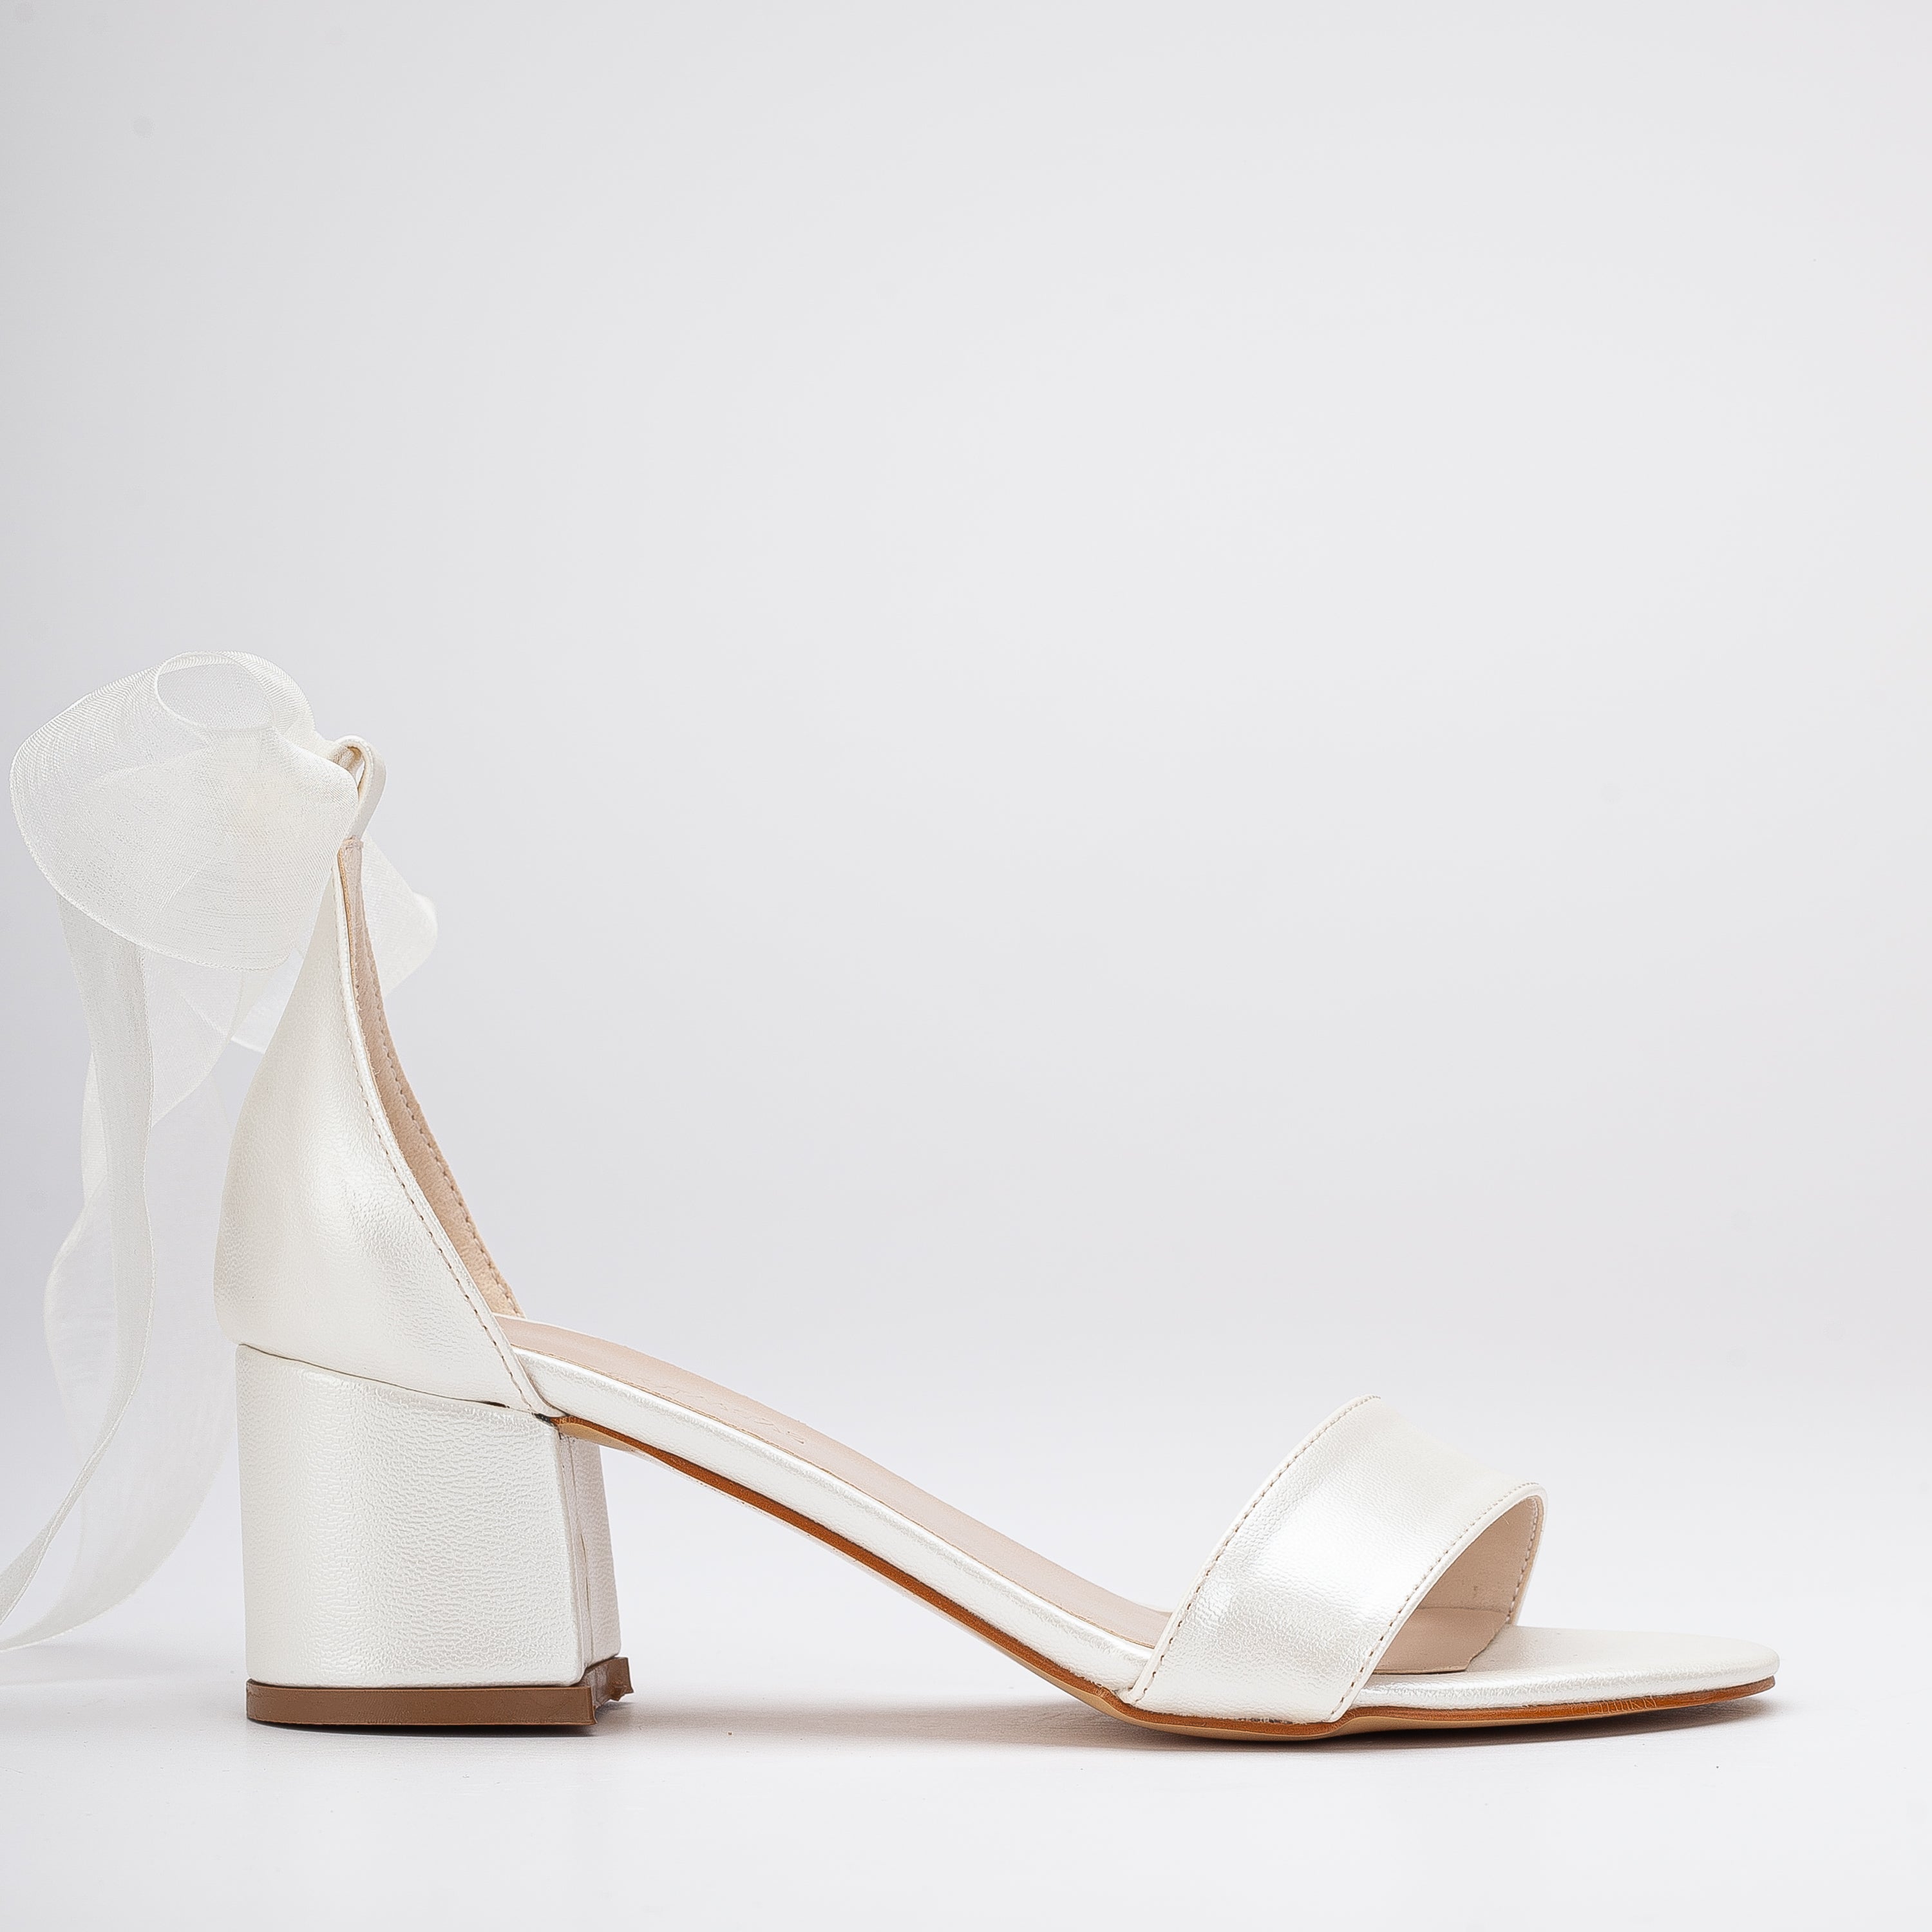 Ariadne - Ivory Wedding Heels with Ribbon